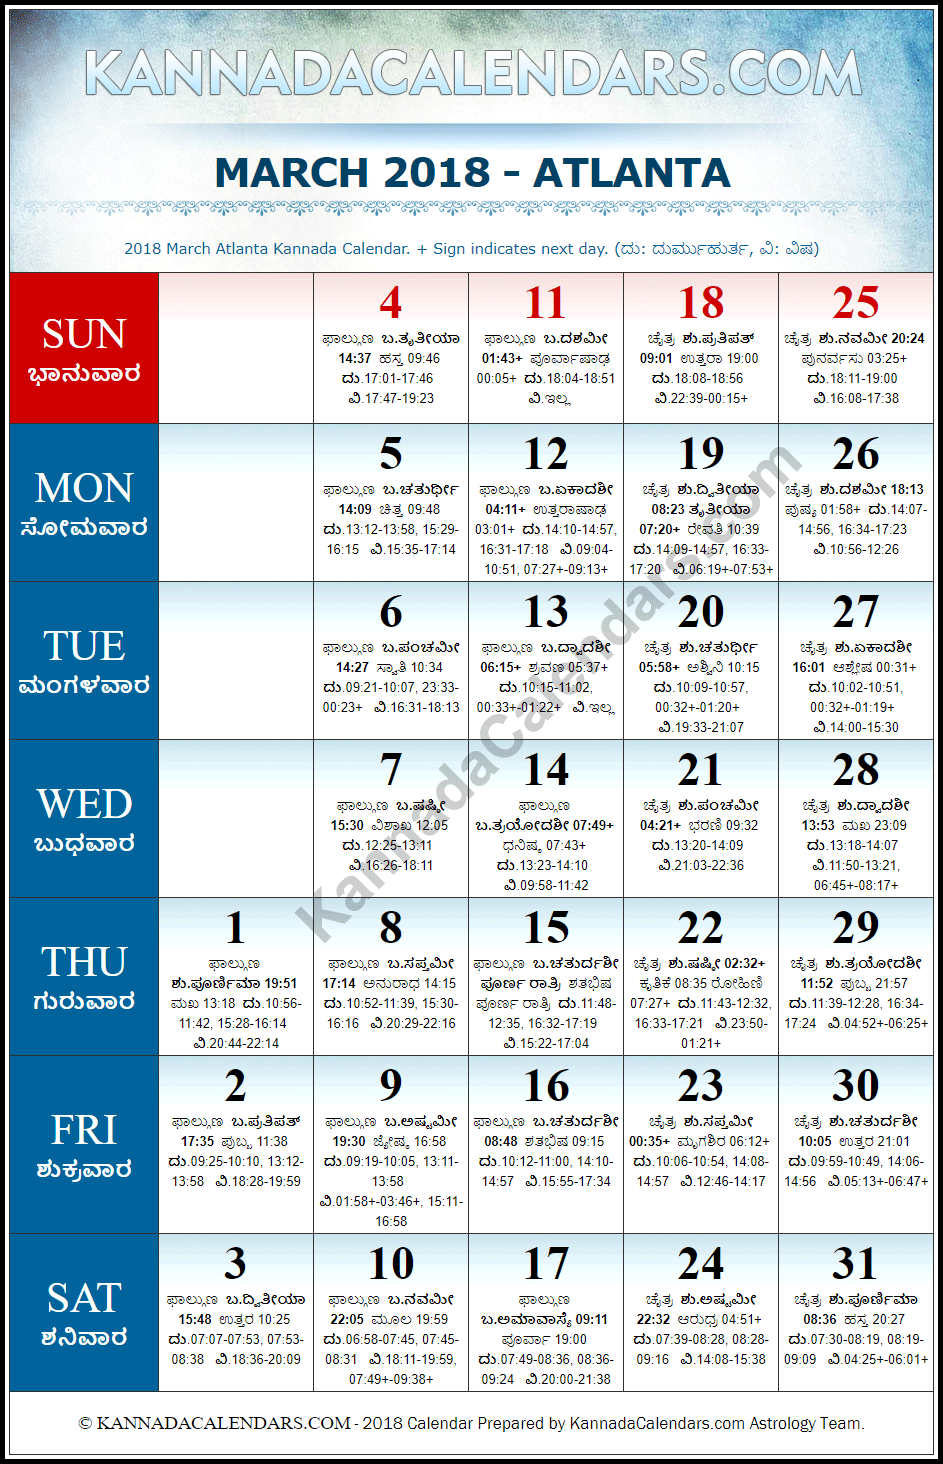 March 2018 Kannada Calendar for Atlanta, USA